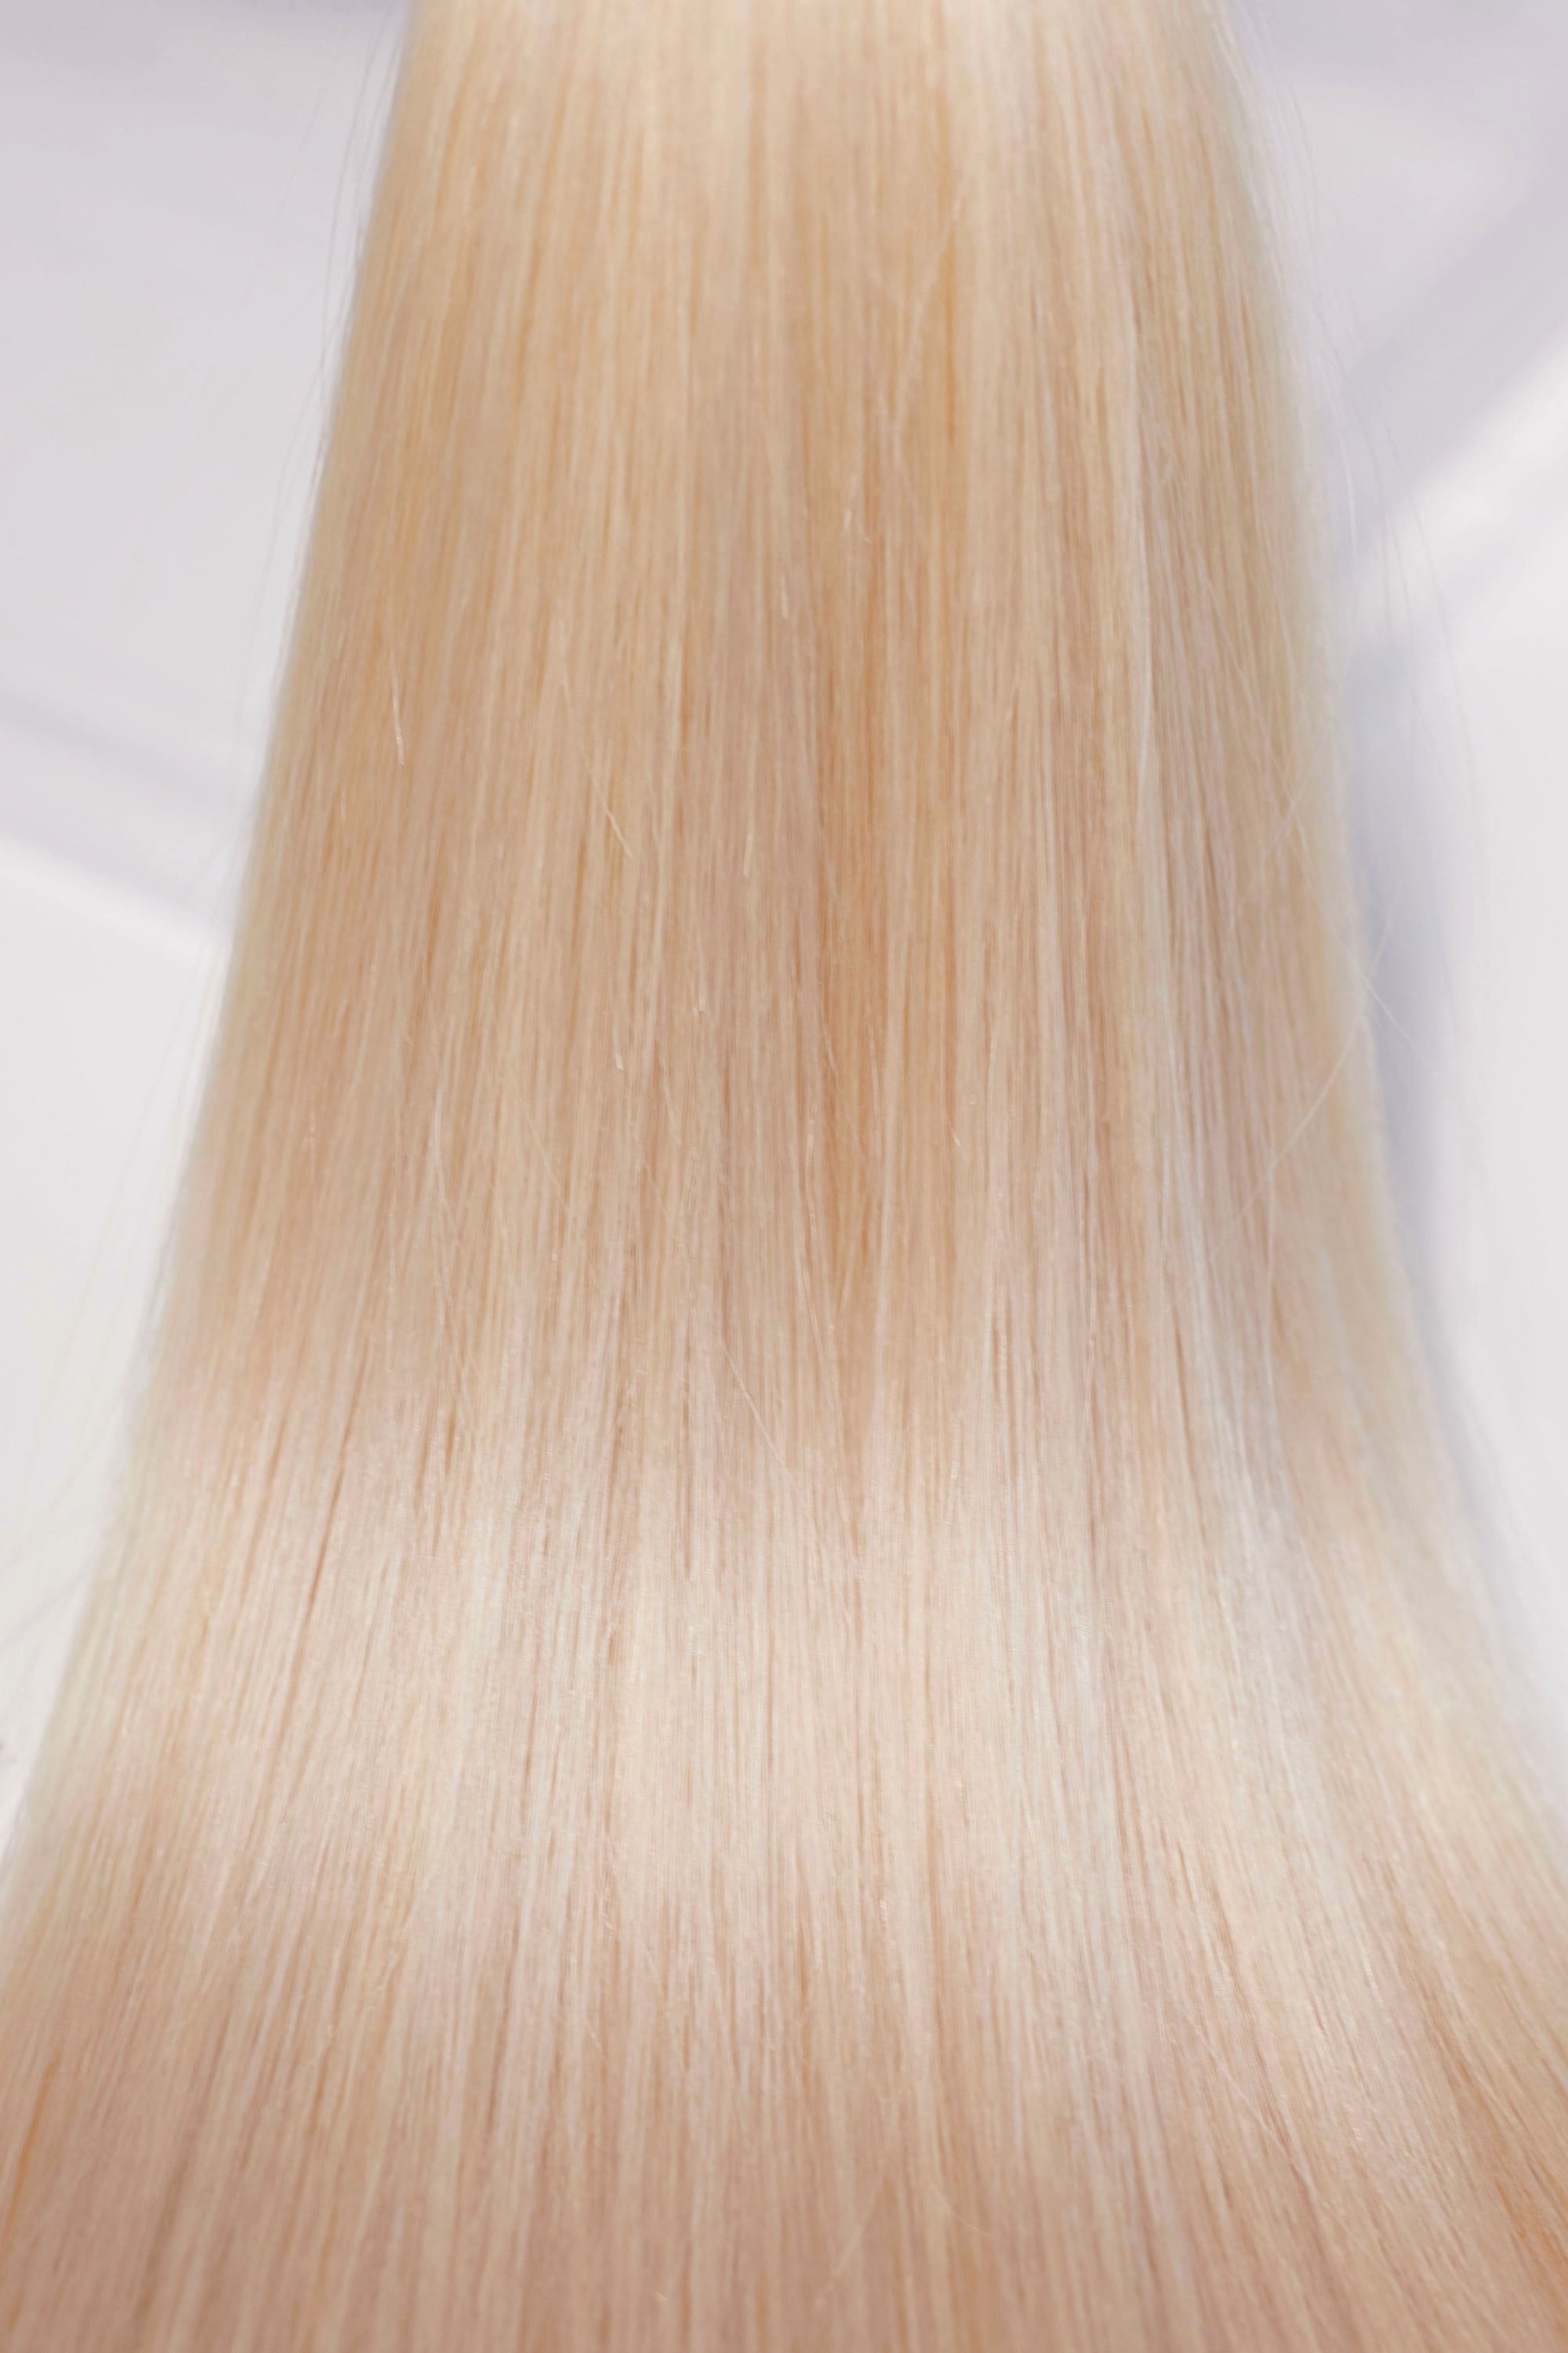 Behair professional Keratin Tip "Premium" 20" (50cm) Natural Straight Platinum Blond #60 - 25g (Micro - 0.5g each pcs) hair extensions